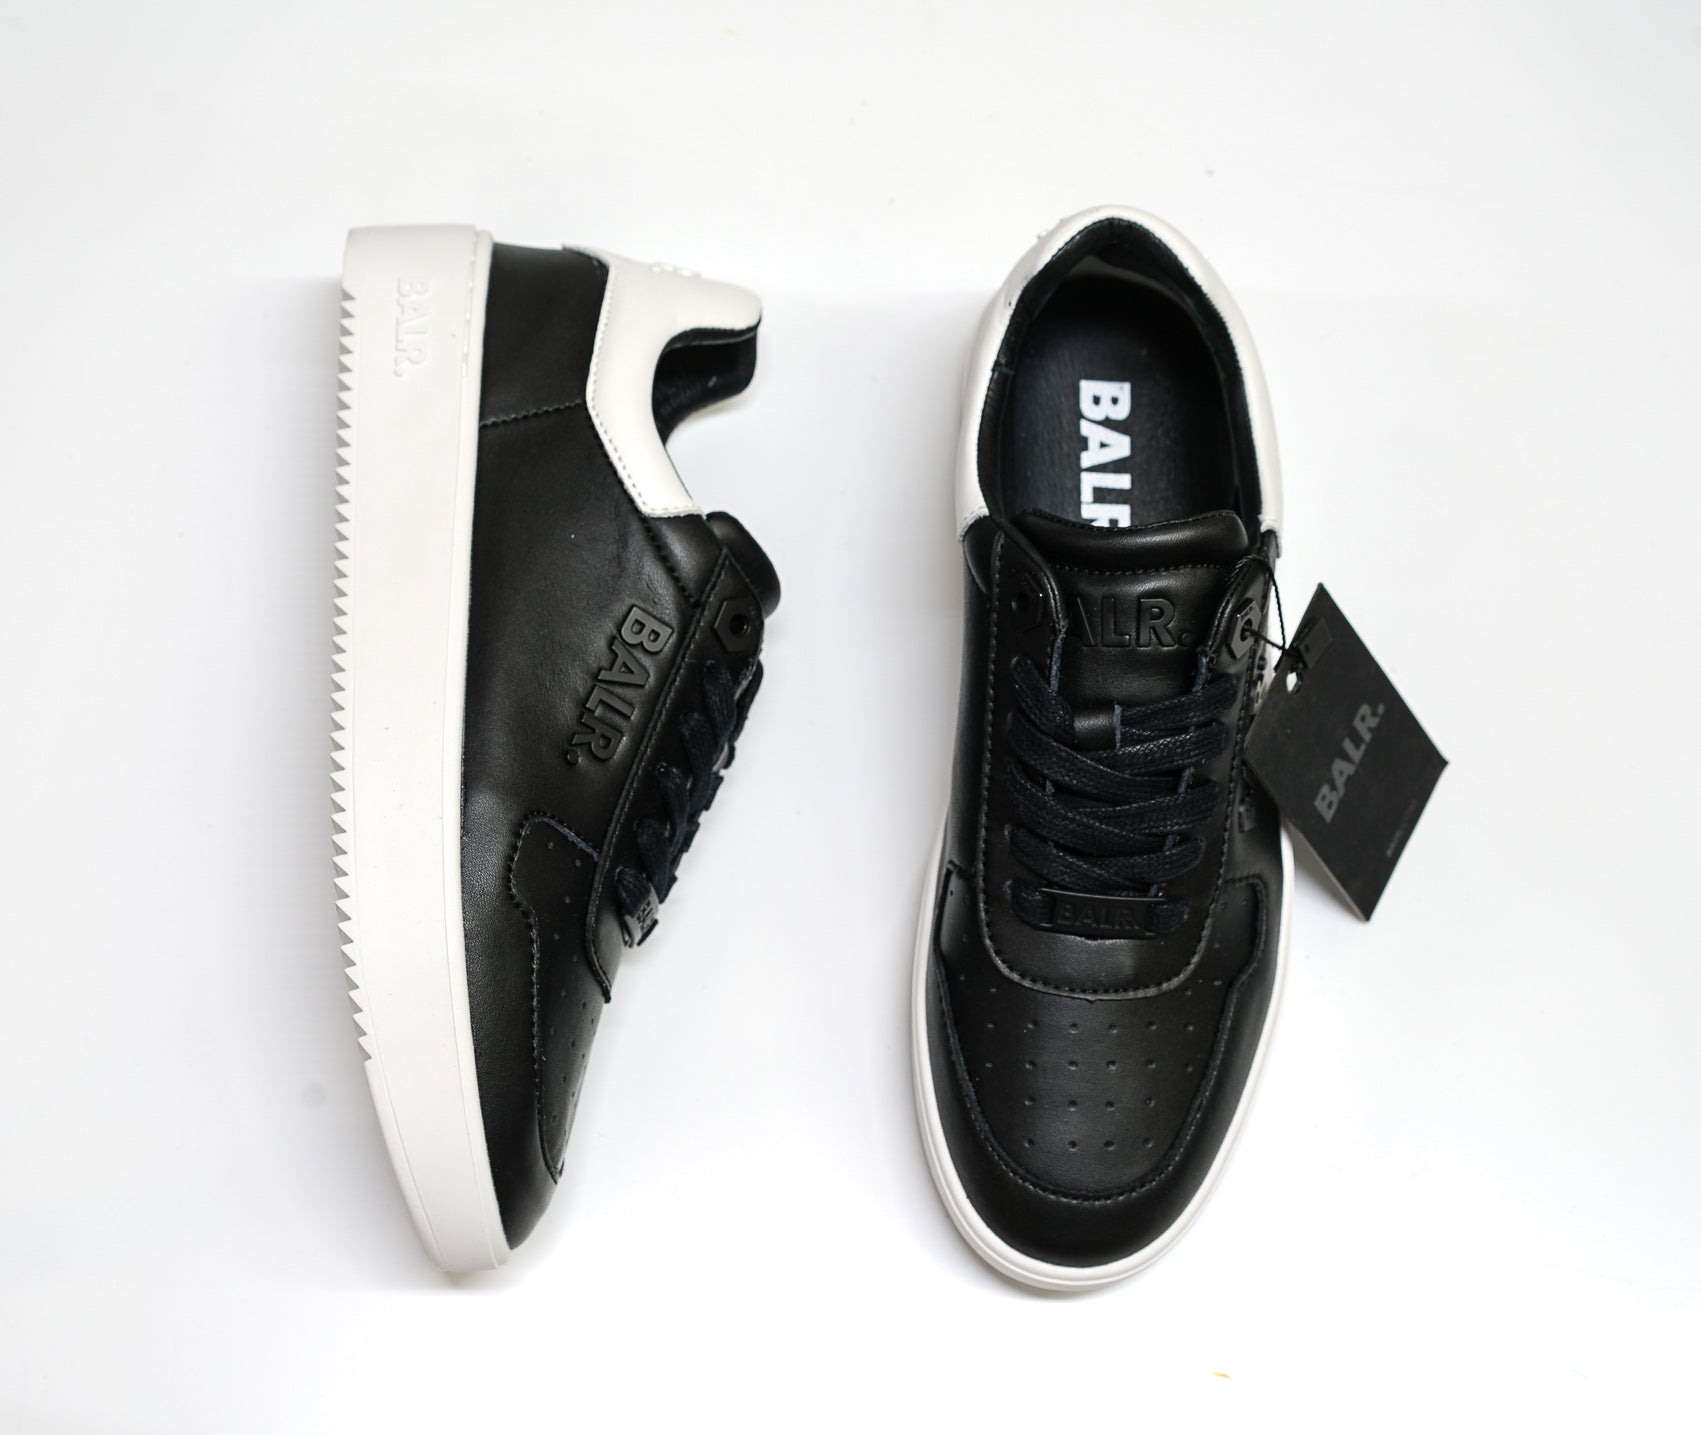 BALR. Black Leather Logo Sneakers - 39 EU Last Size